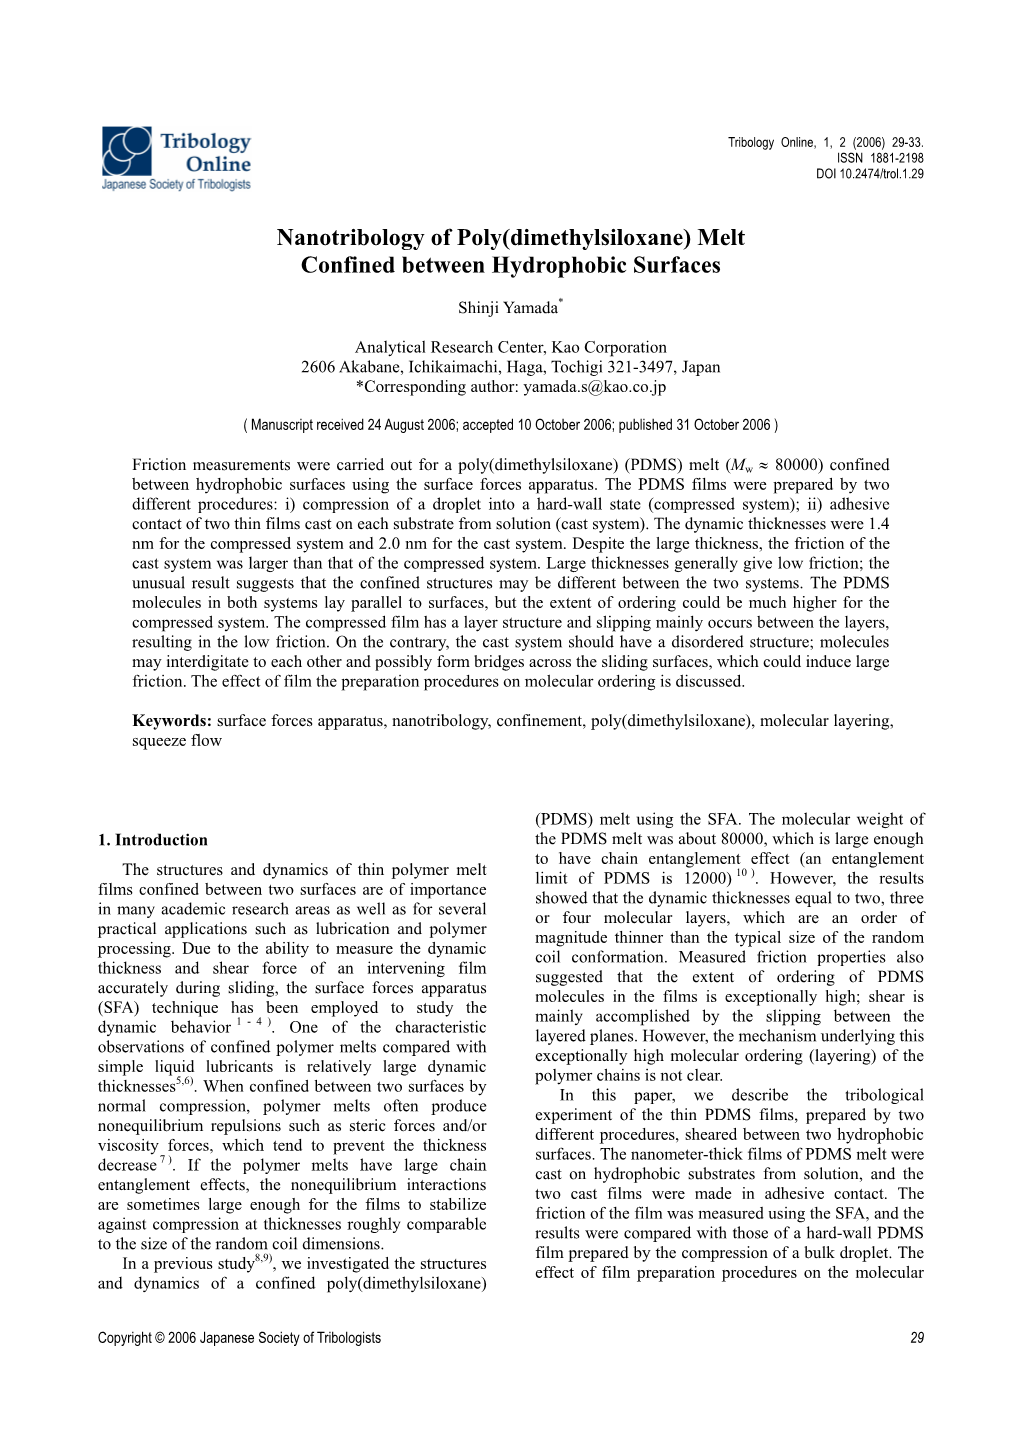 Nanotribology of Poly (Dimethylsiloxane) Melt Confined